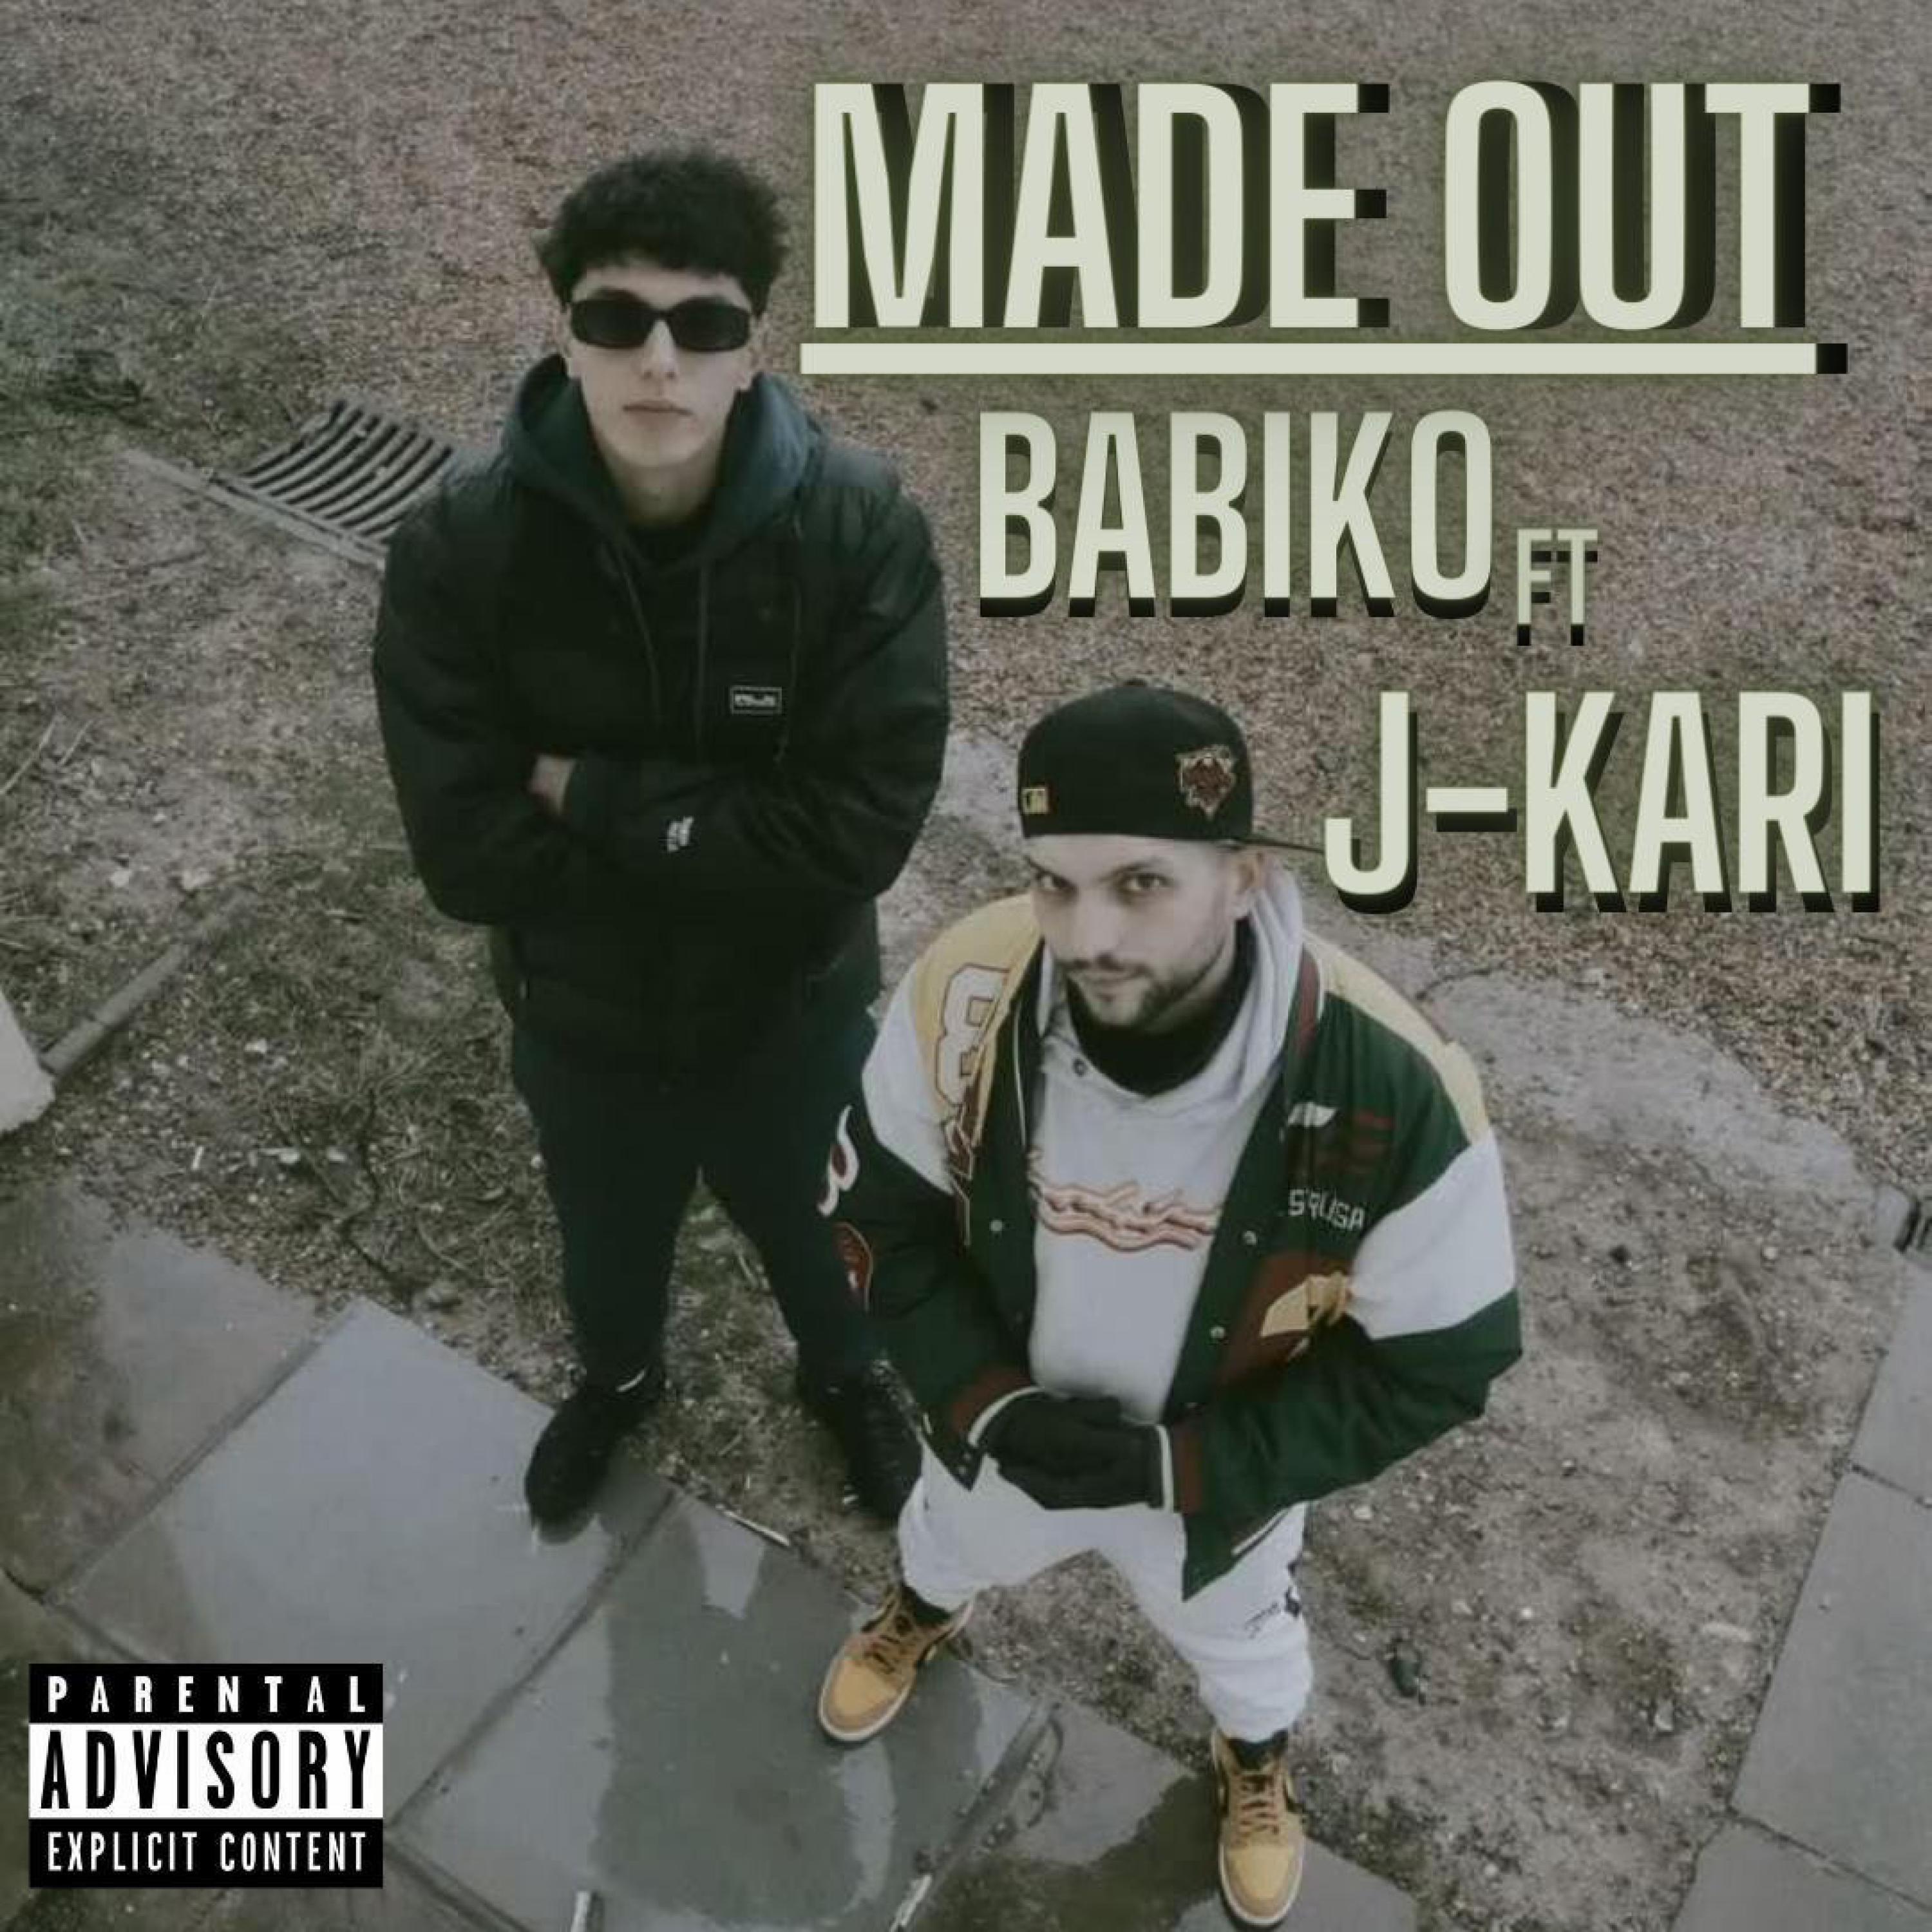 Babiko - Made Out (feat. J-kari)